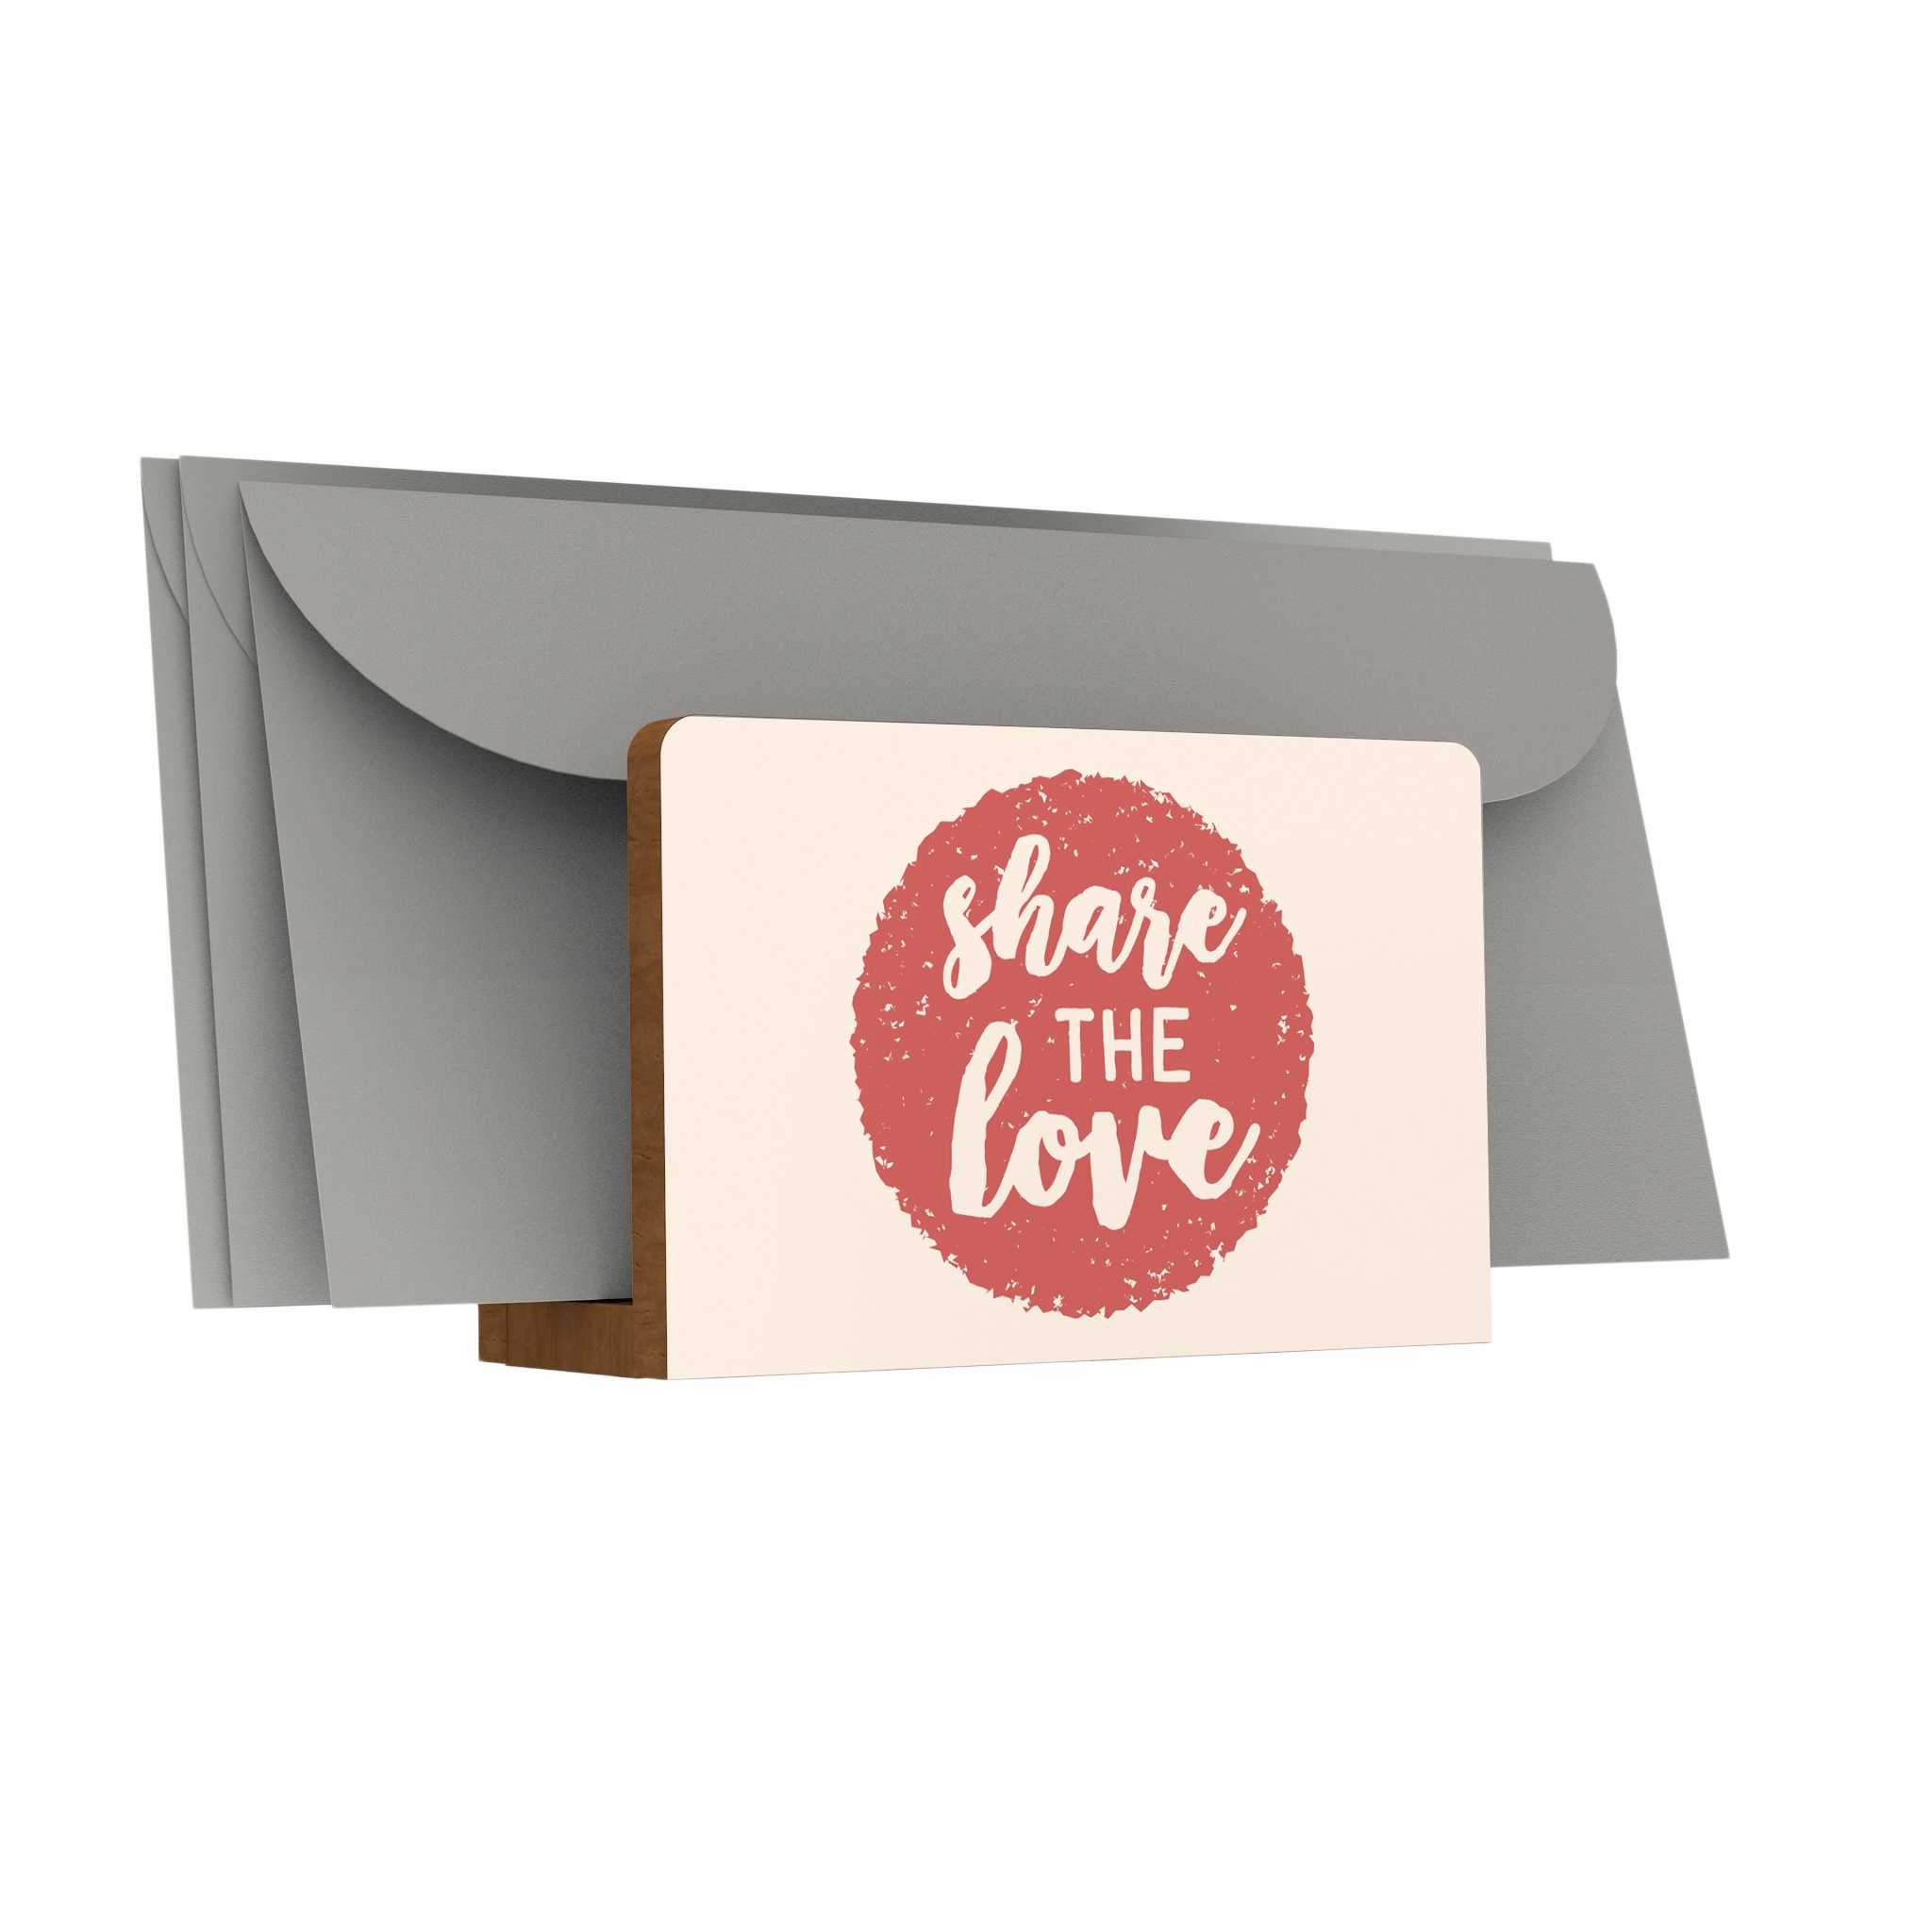 Words of Love Letter Holder: Share the Love